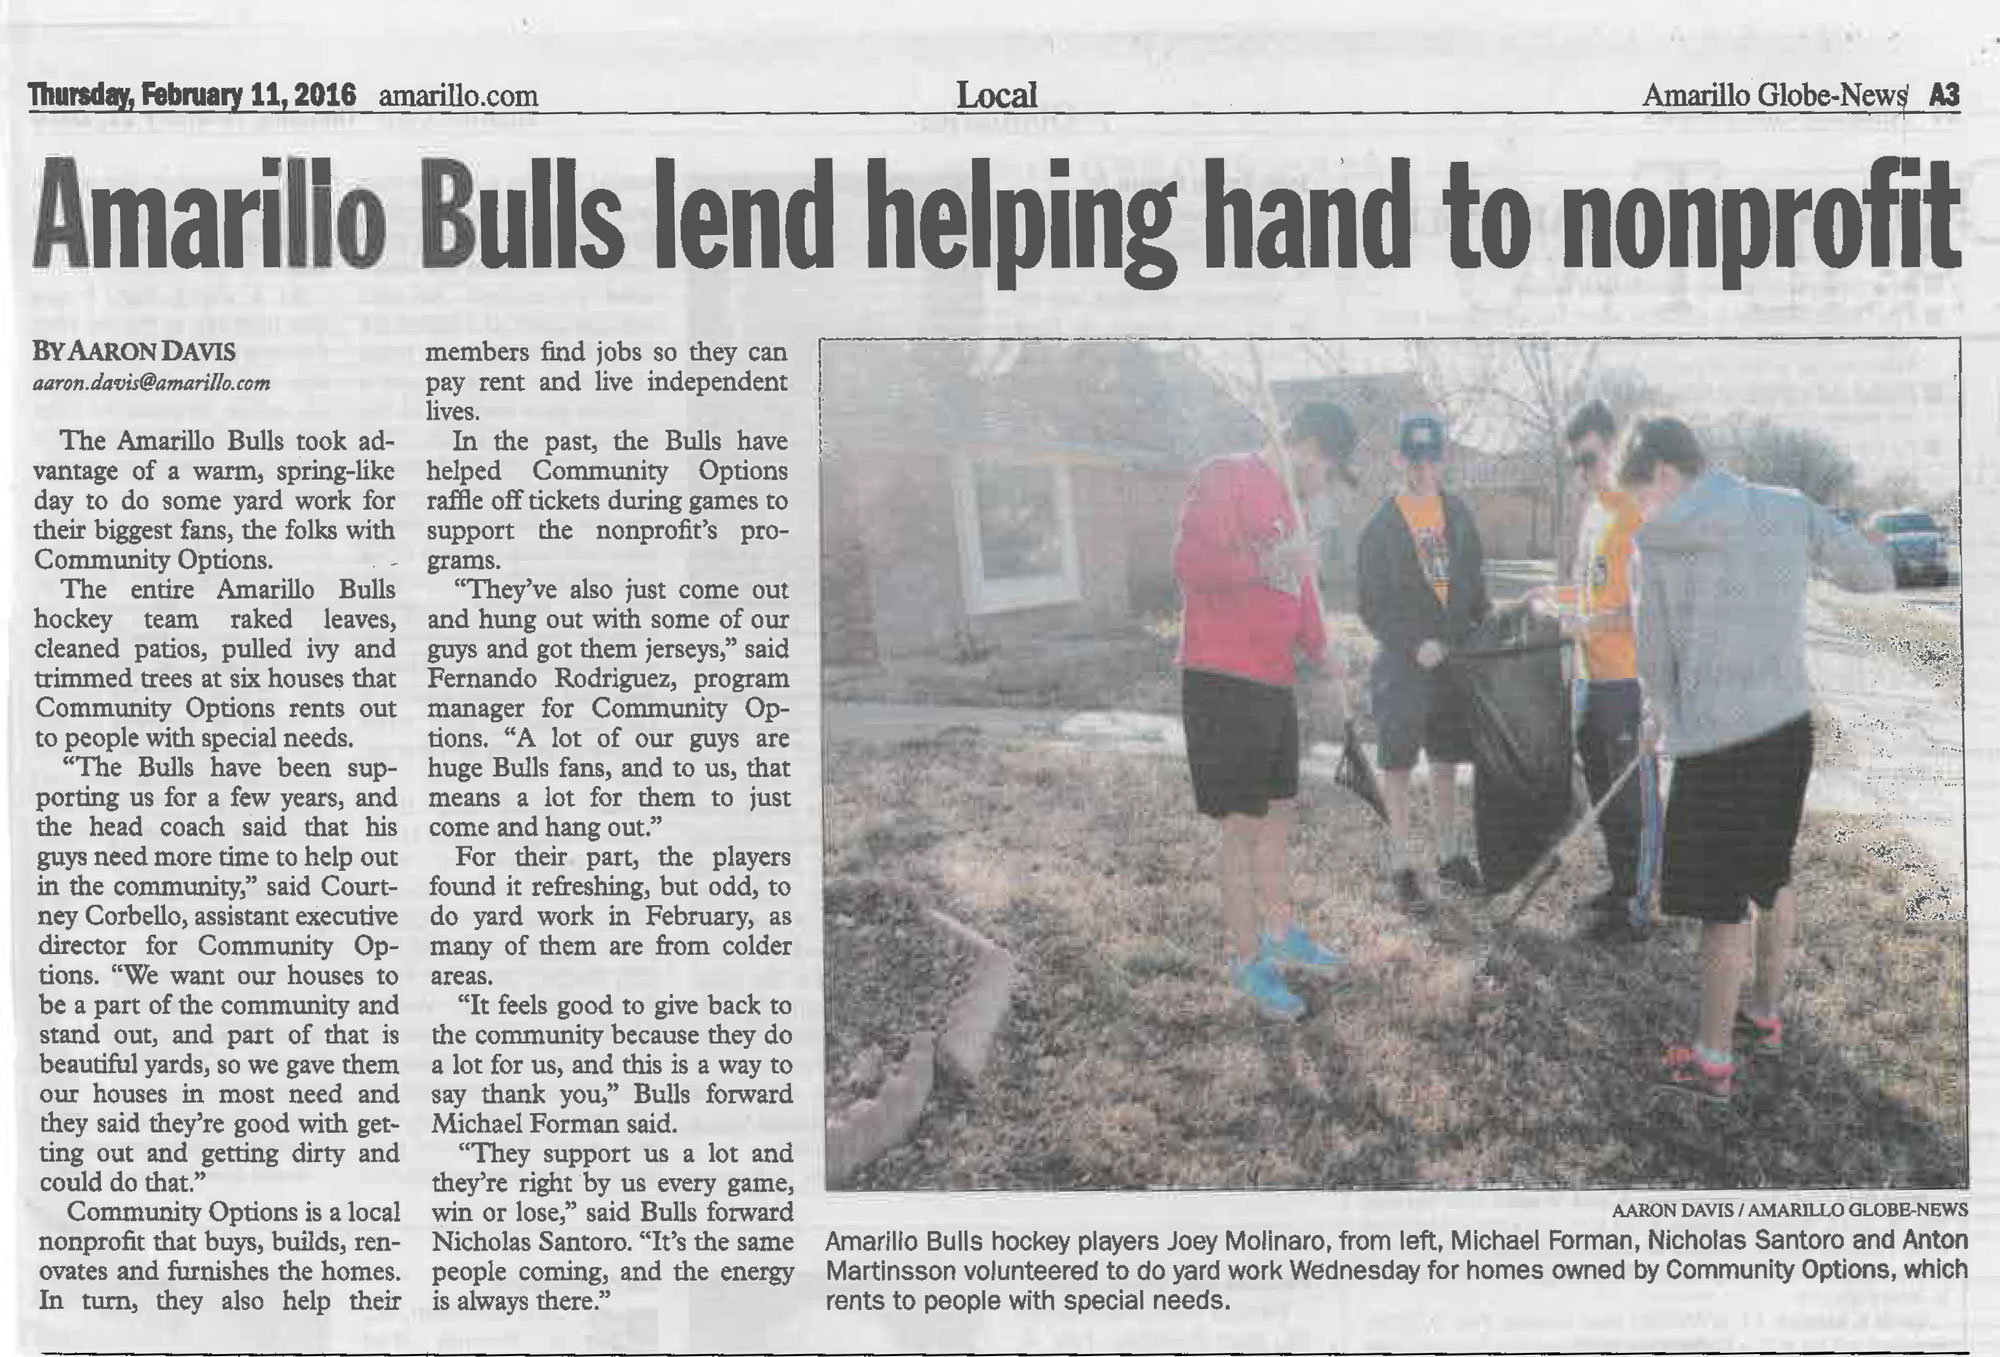 Amarillo Bulls lend helping hand to nonprofit